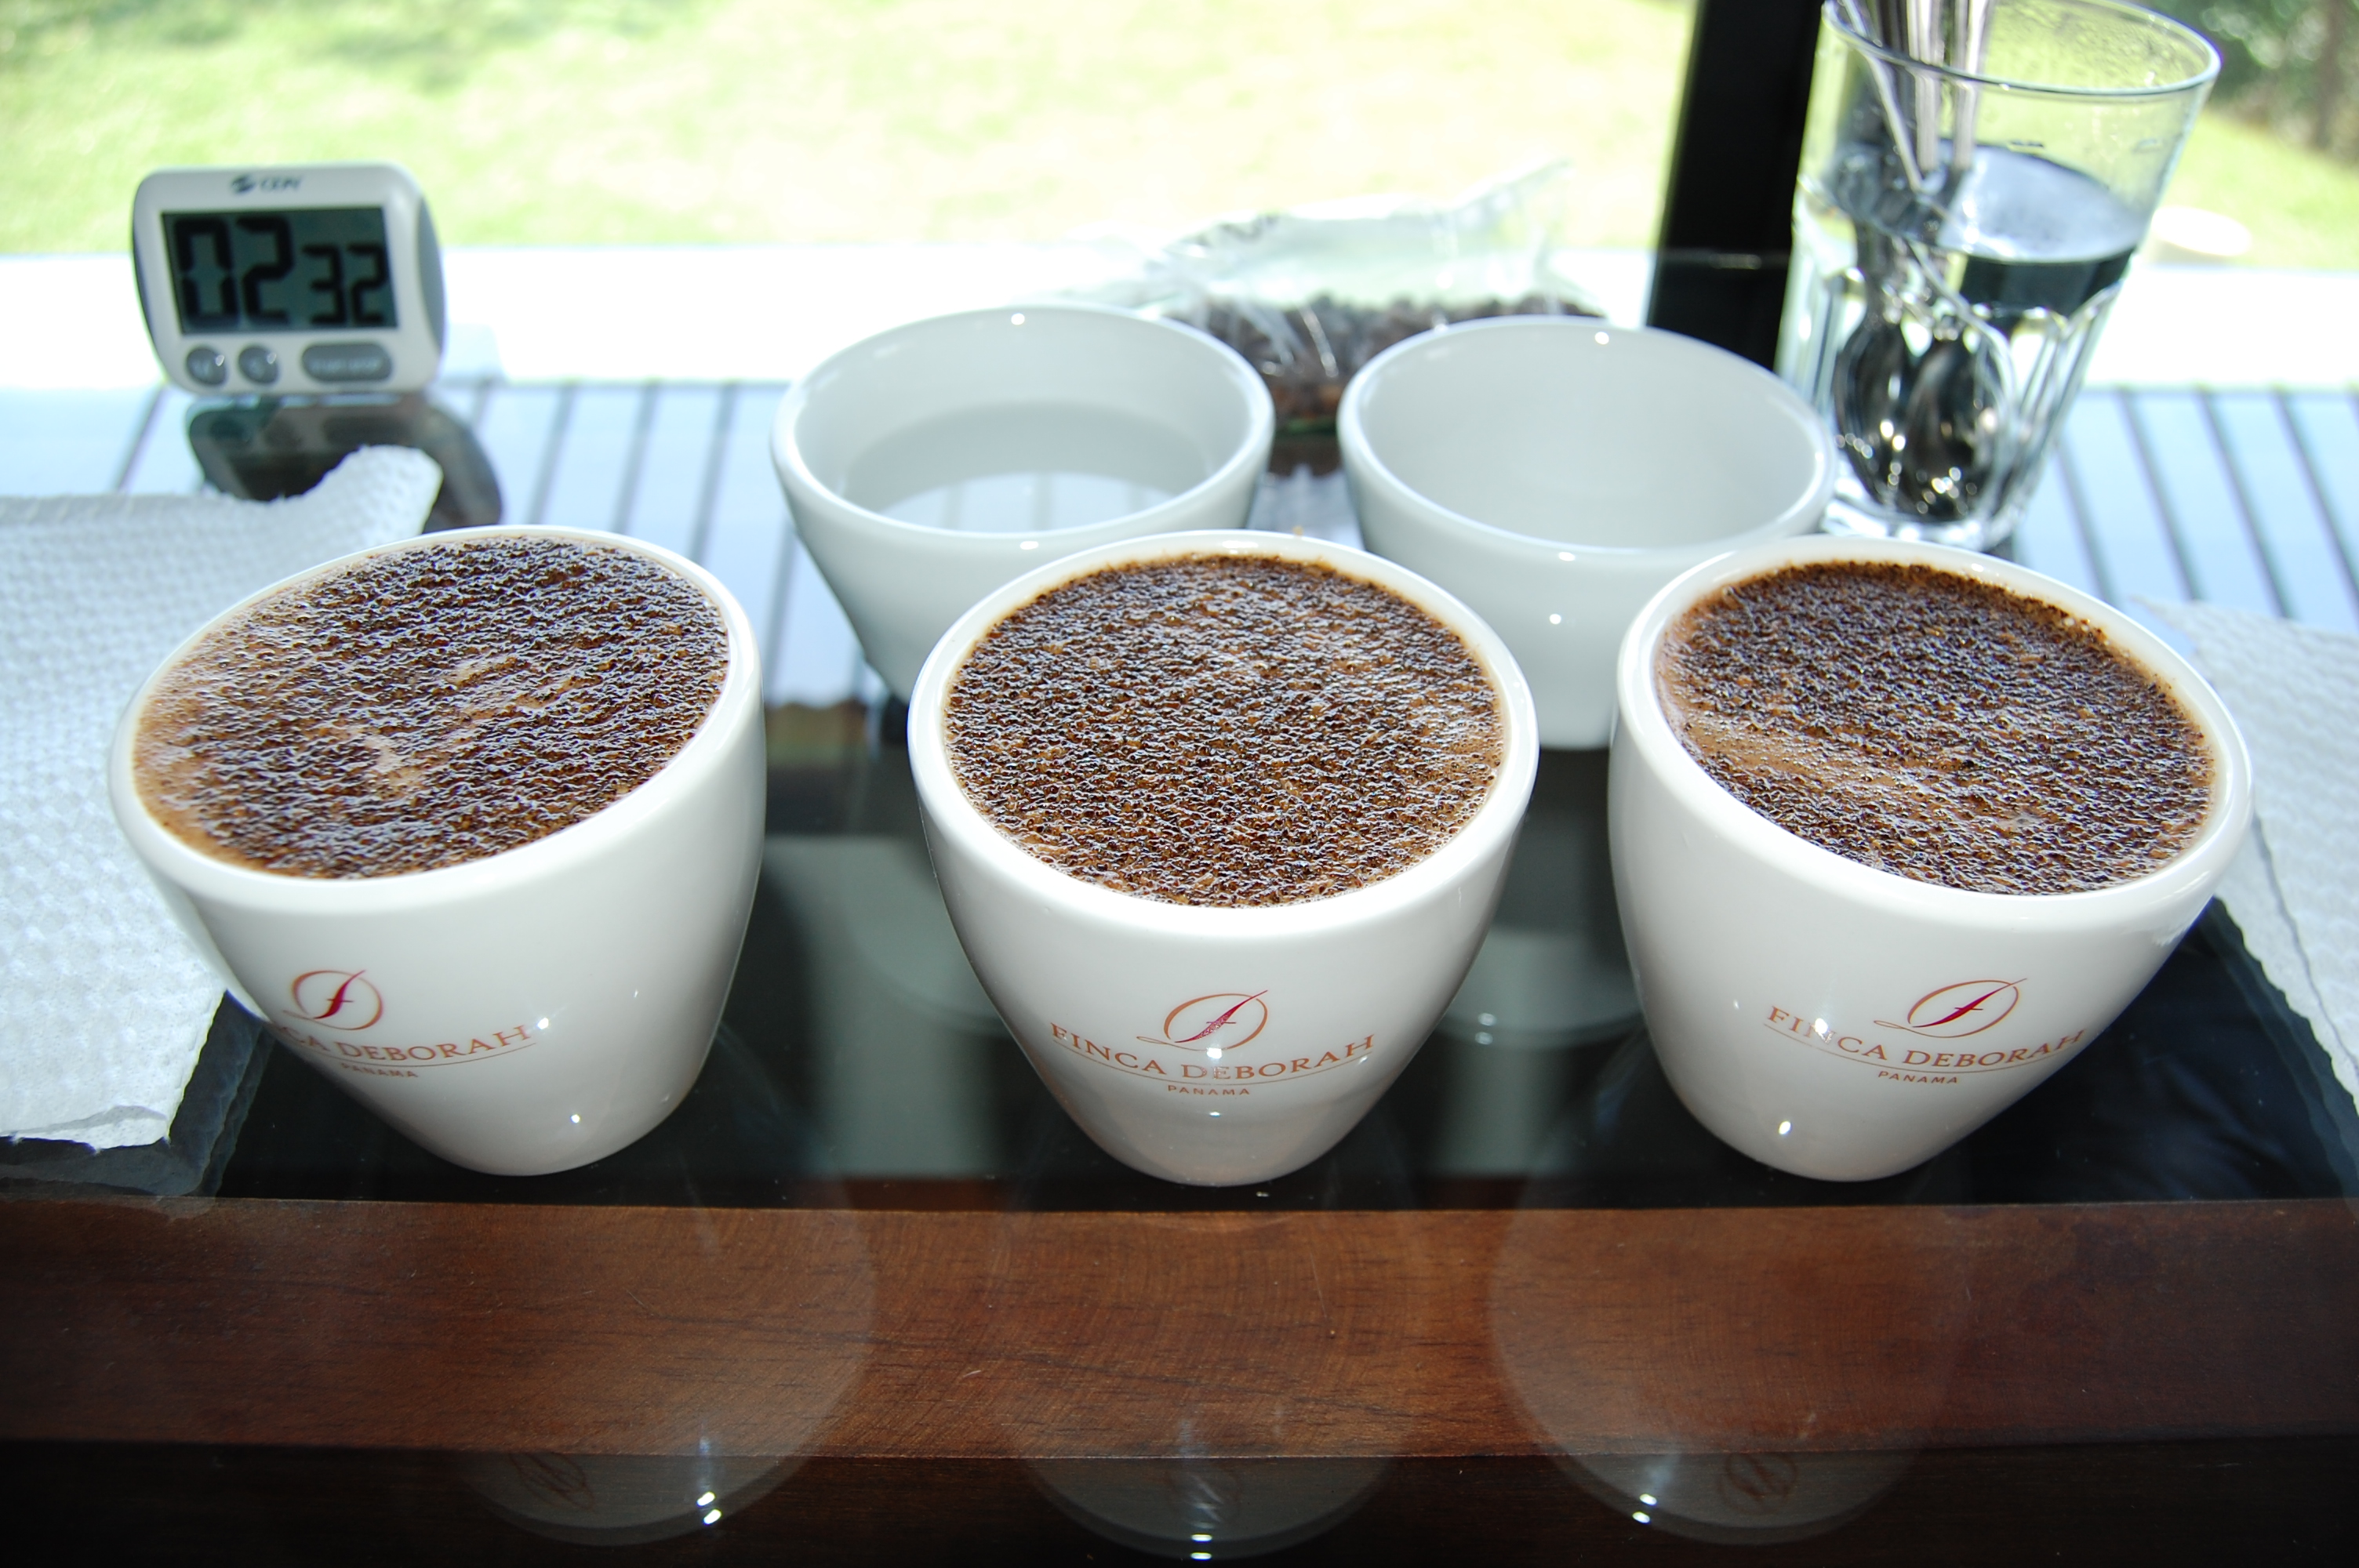 Cupping Finca Deborah Geisha Coffee from Panama.